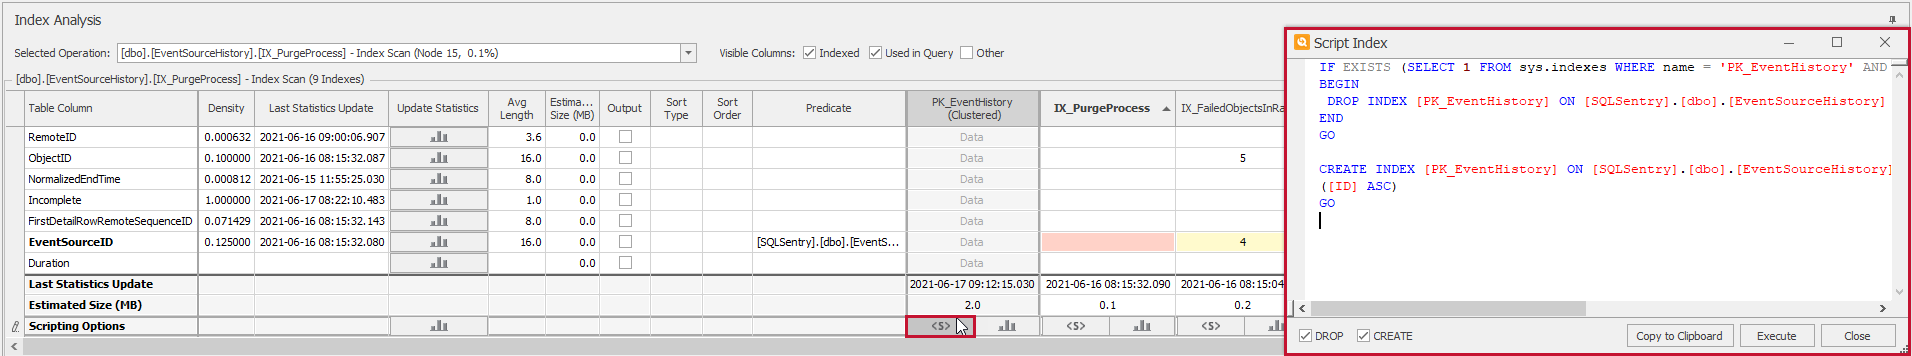 SQL Sentry Plan Explorer Index Analysis open Script Index